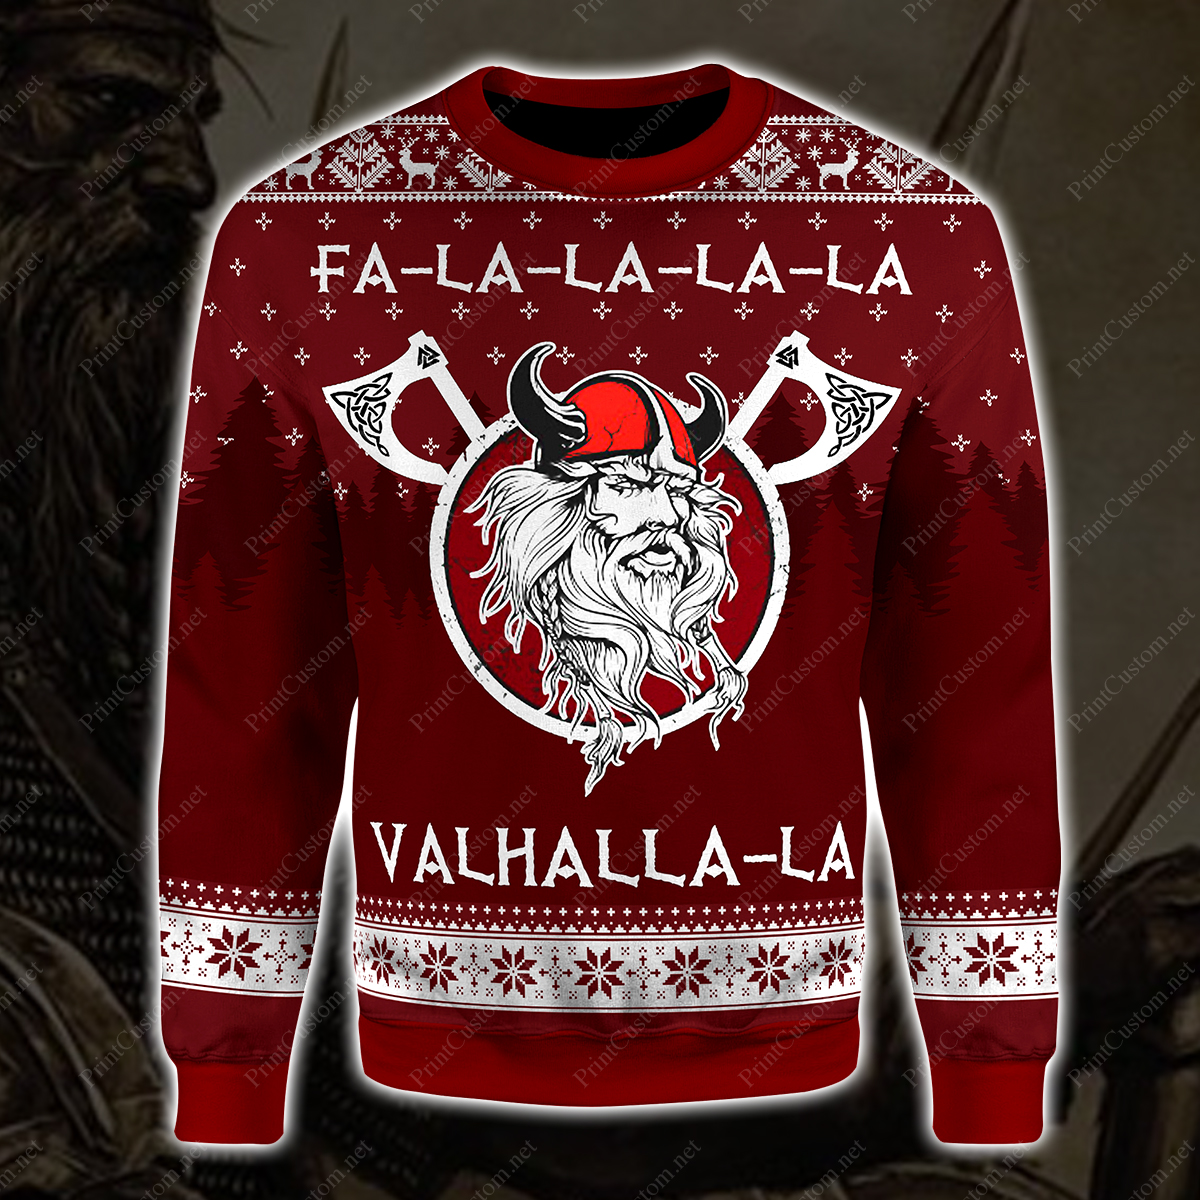 Fa-la-la-la-la valhalla-la viking ugly christmas sweater 1